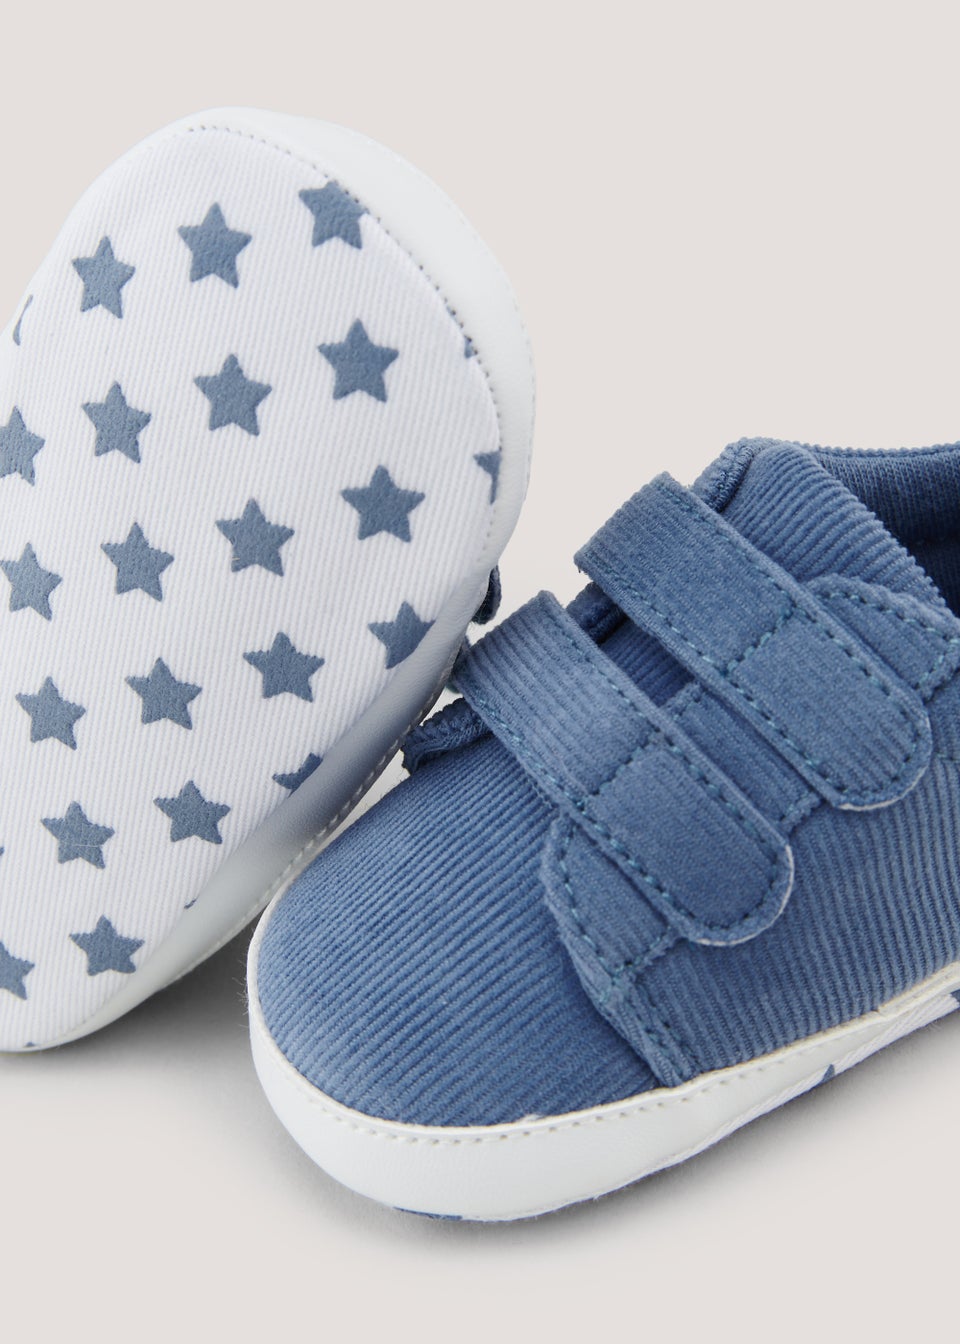 Blue Riptape Slip On Soft Sole Baby Shoes (Newborn-18mths)